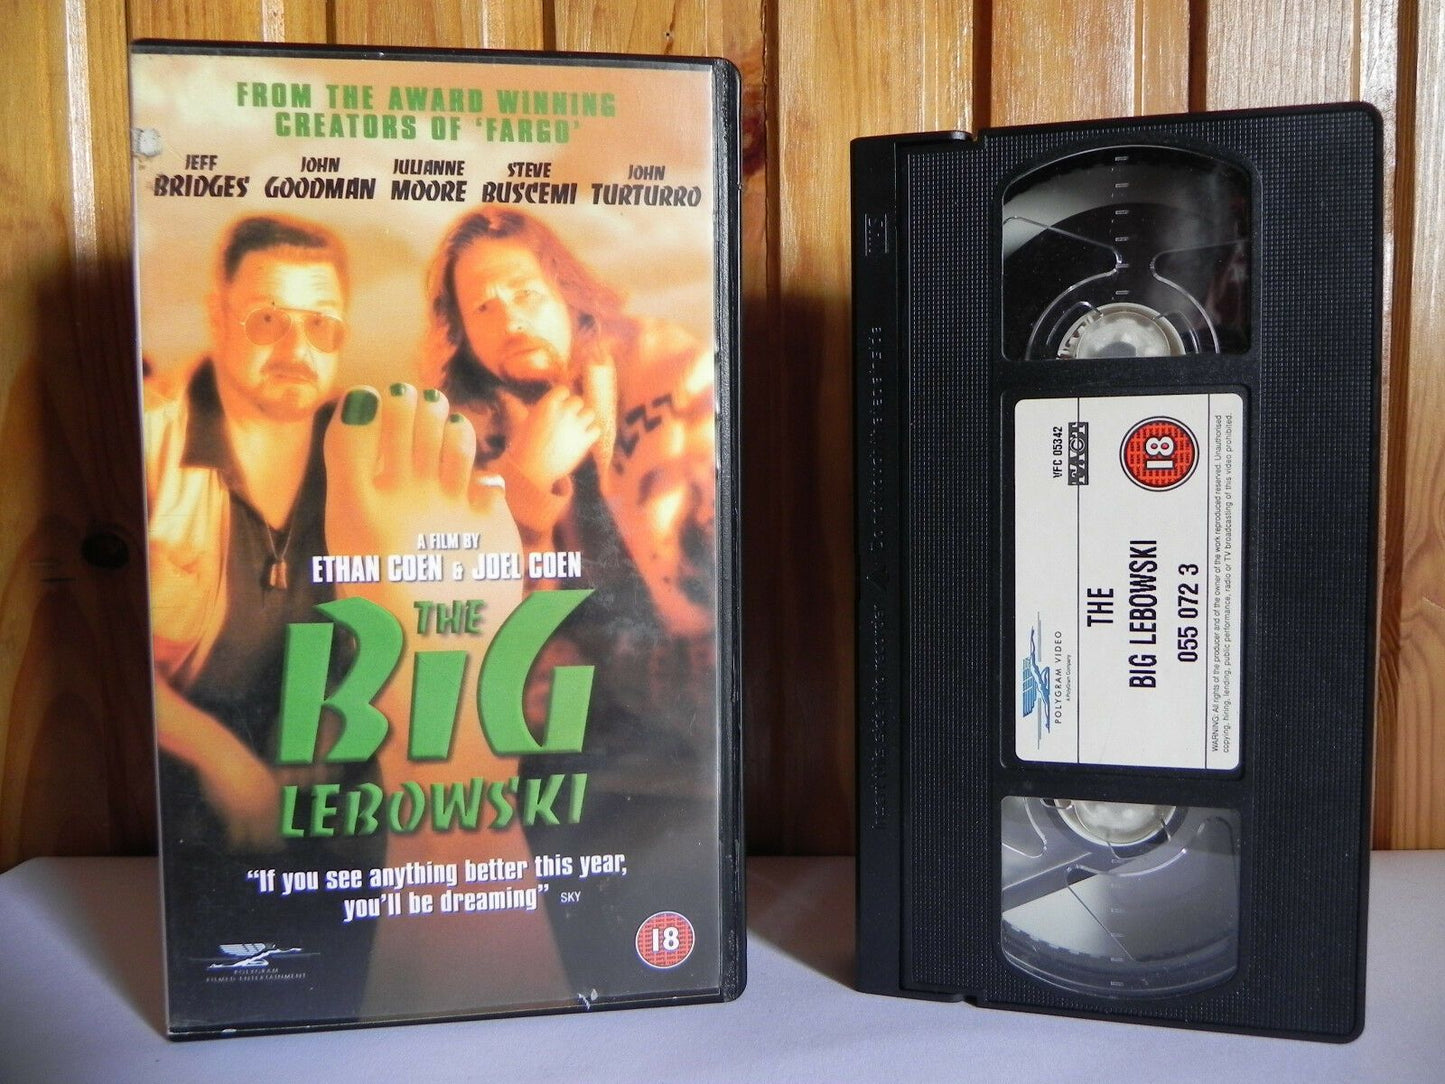 The Big Lebowski - PolyGram - Comedy - Jeff Bridges - John Goodman - Pal VHS-